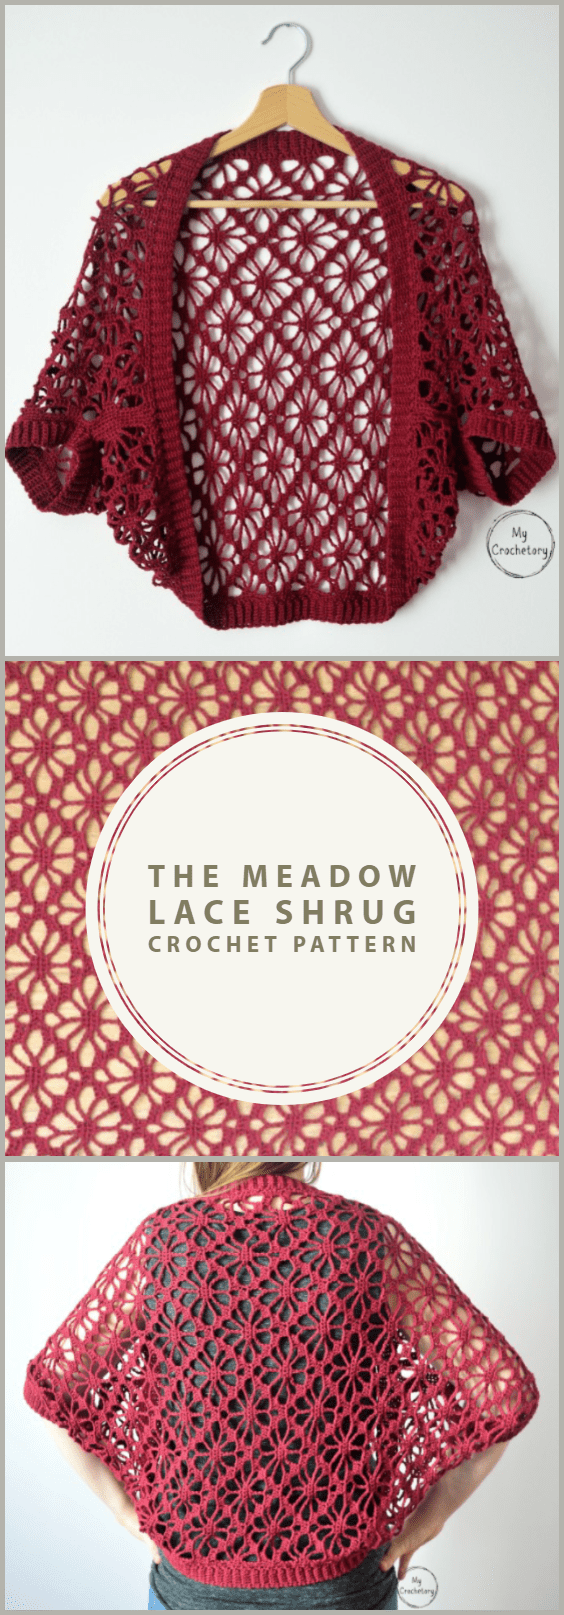 Meadow Lace Shrug Crochet